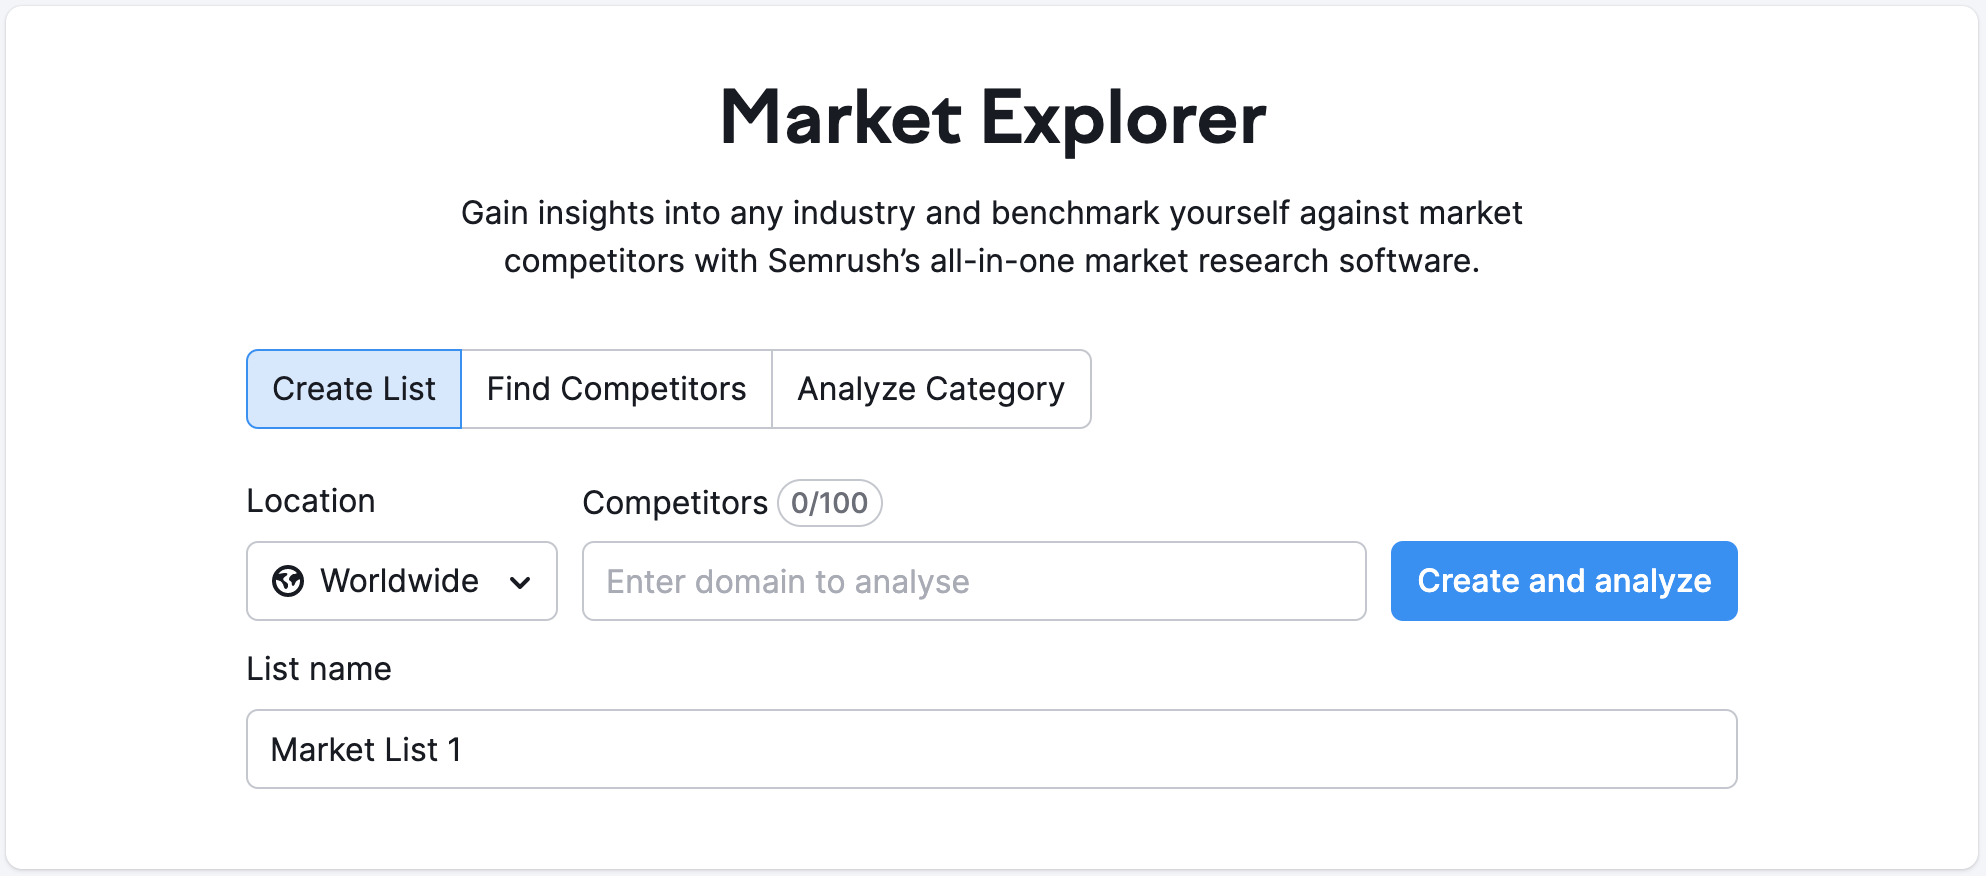 A screenshot of the "Market Explorer" landing page